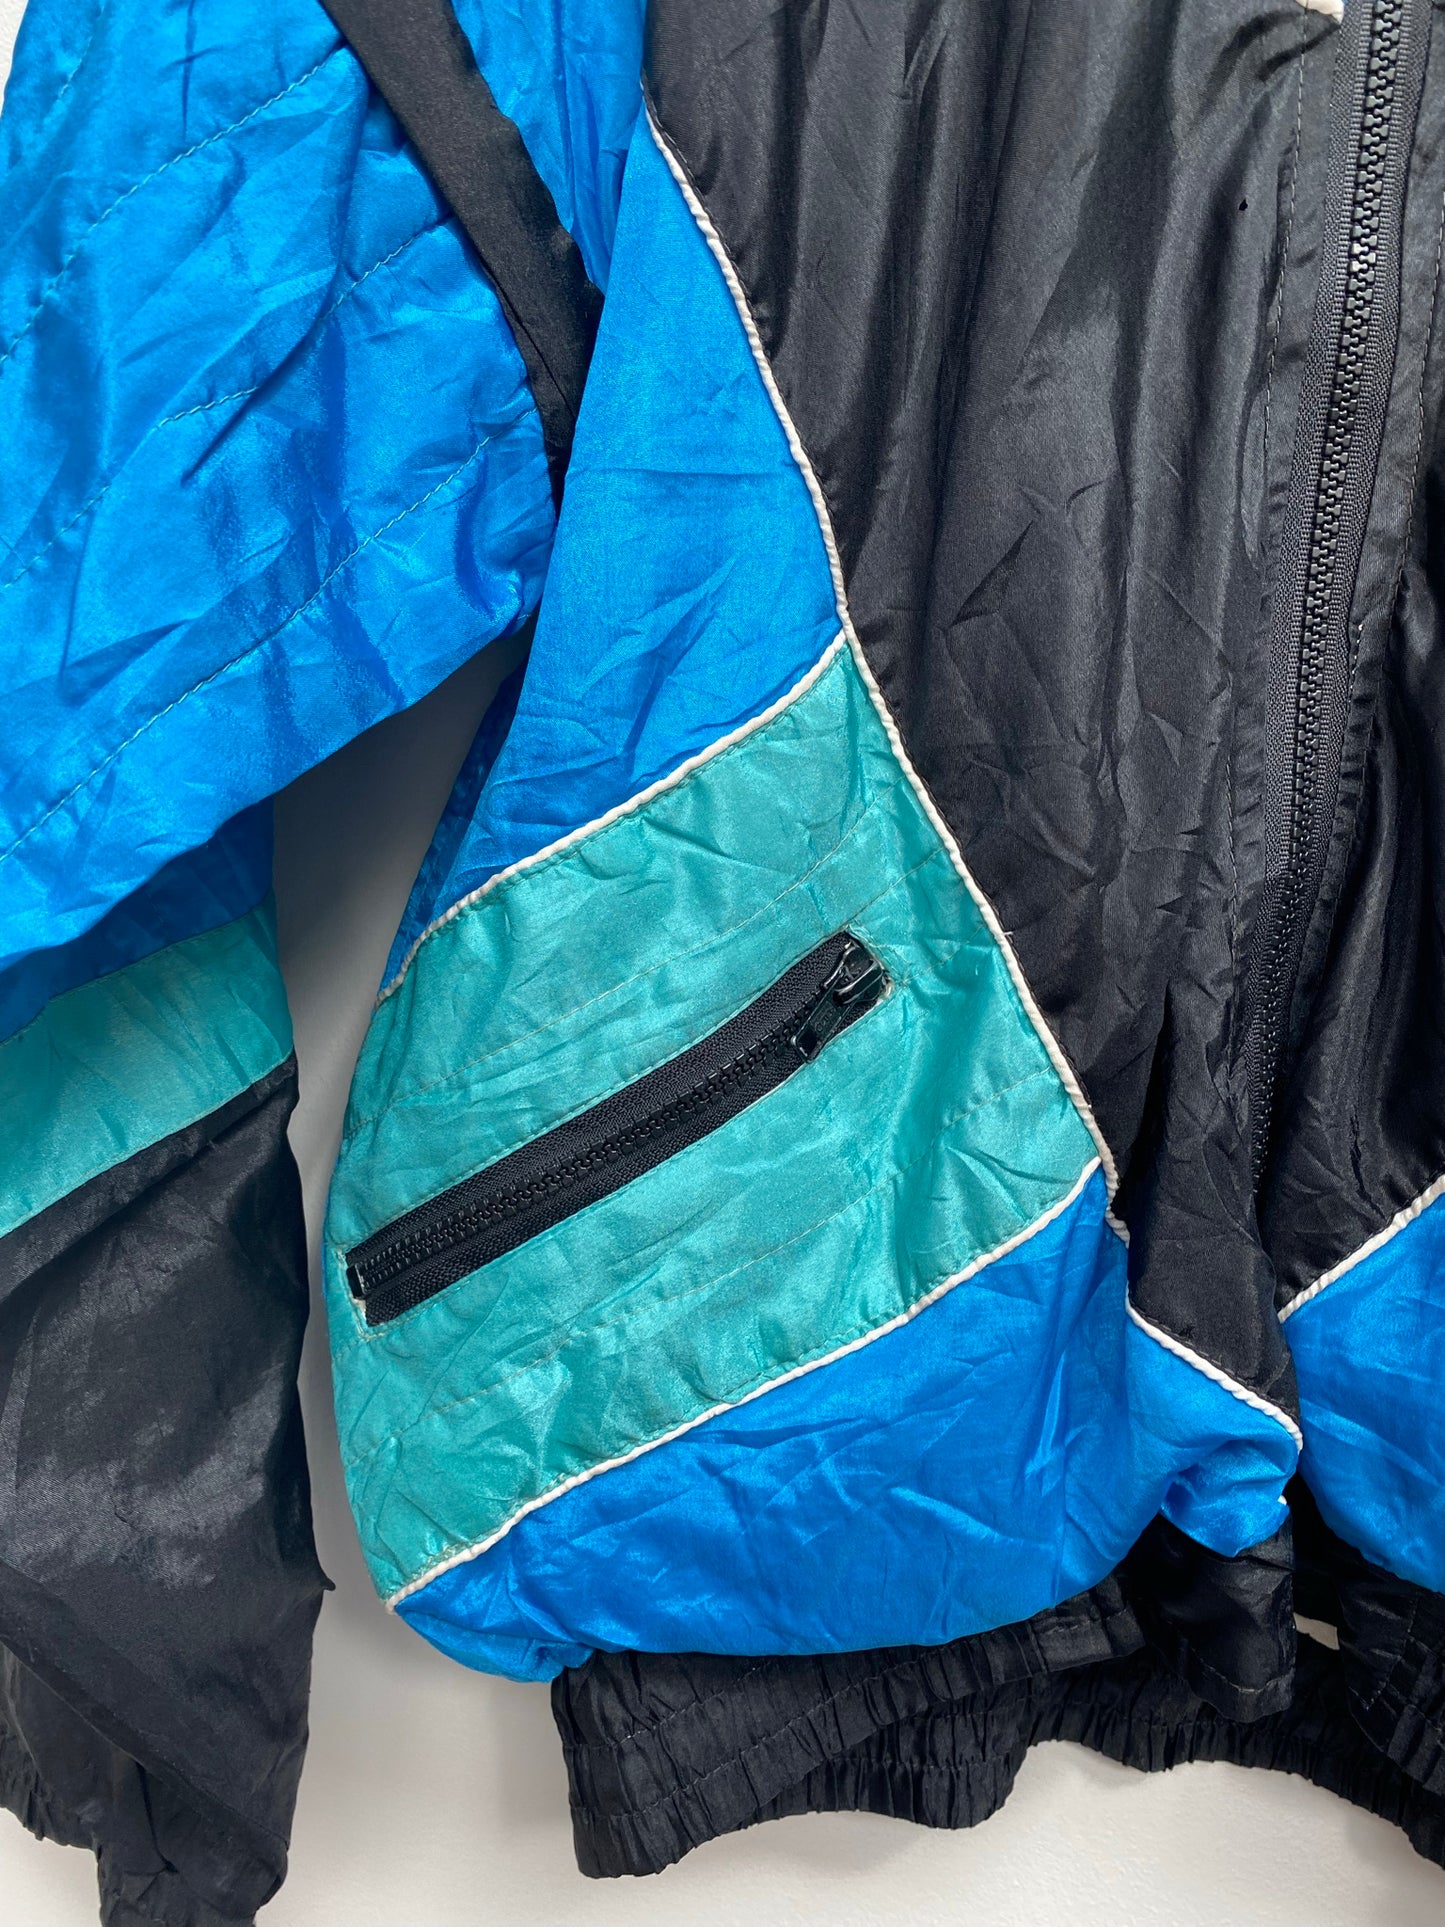 Vintage 80s Blue, Black Shell Jacket Size Medium - festival wear